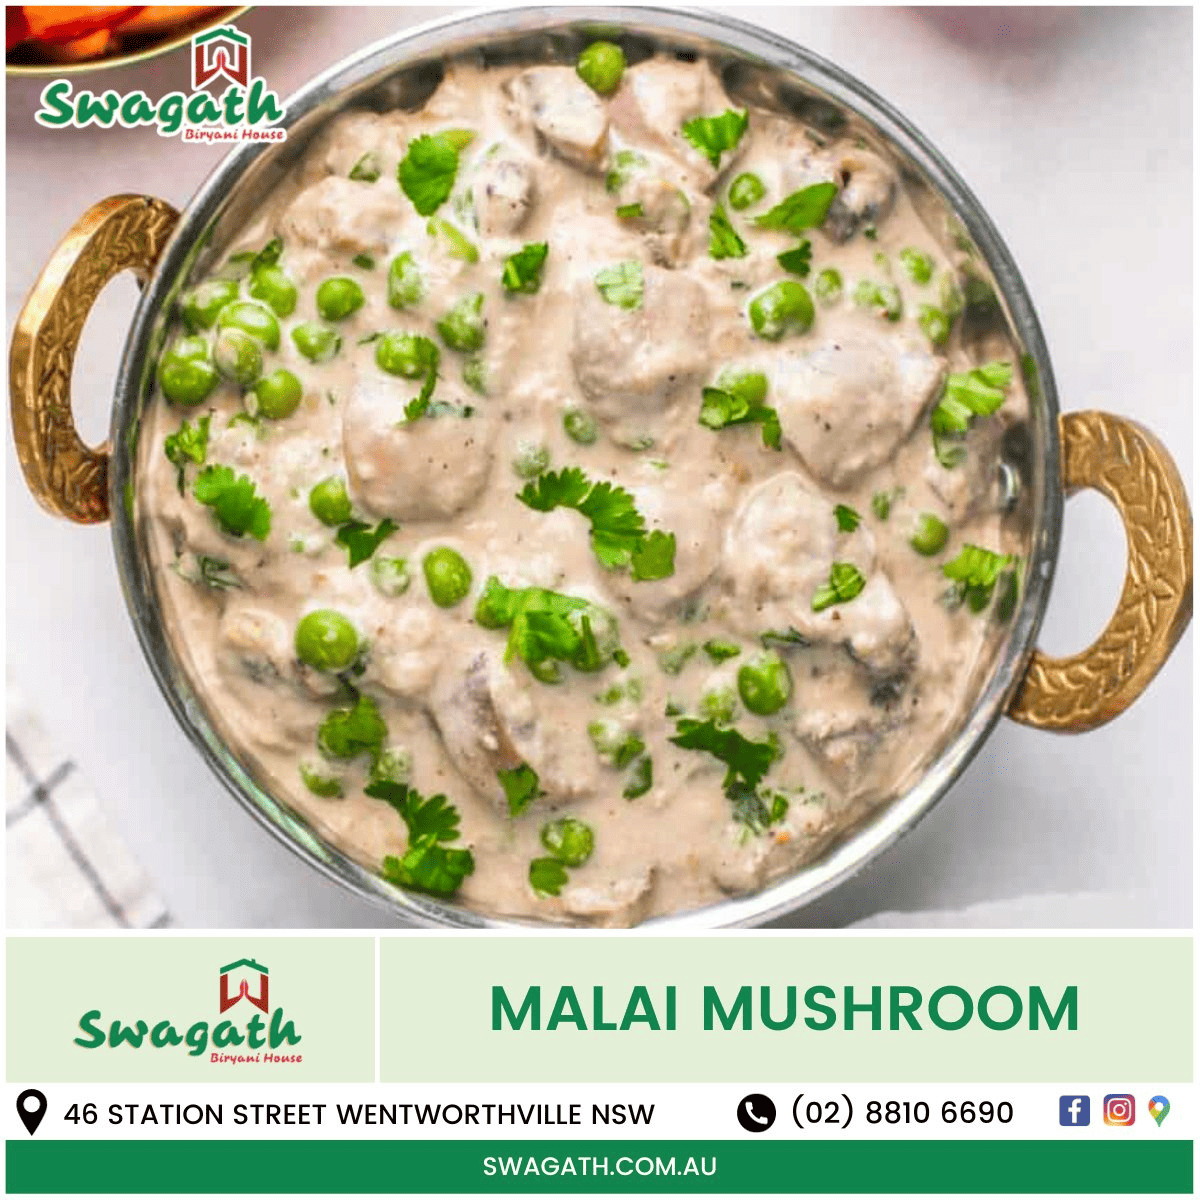 Malai Mushroom: A creamy and flavorful vegetarian dish